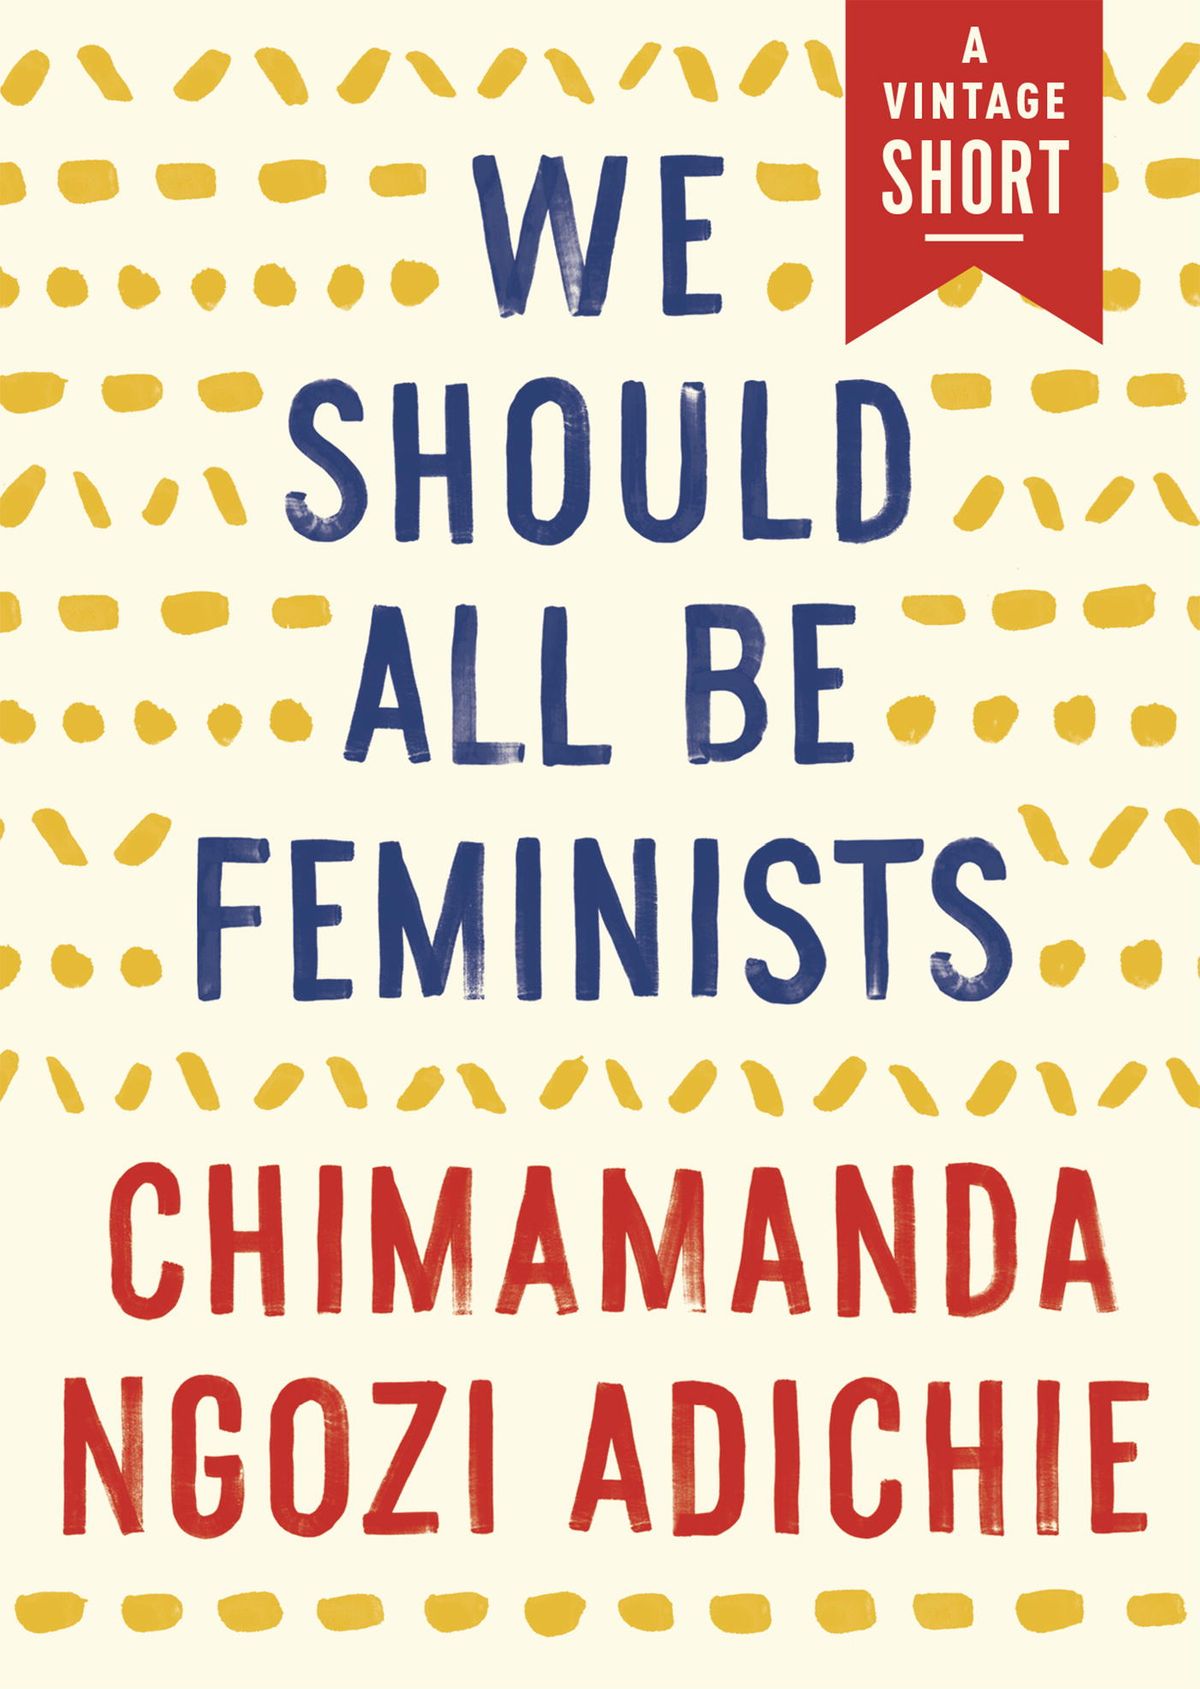 We Should All be Feminists- buku inspiratif untuk perempuan